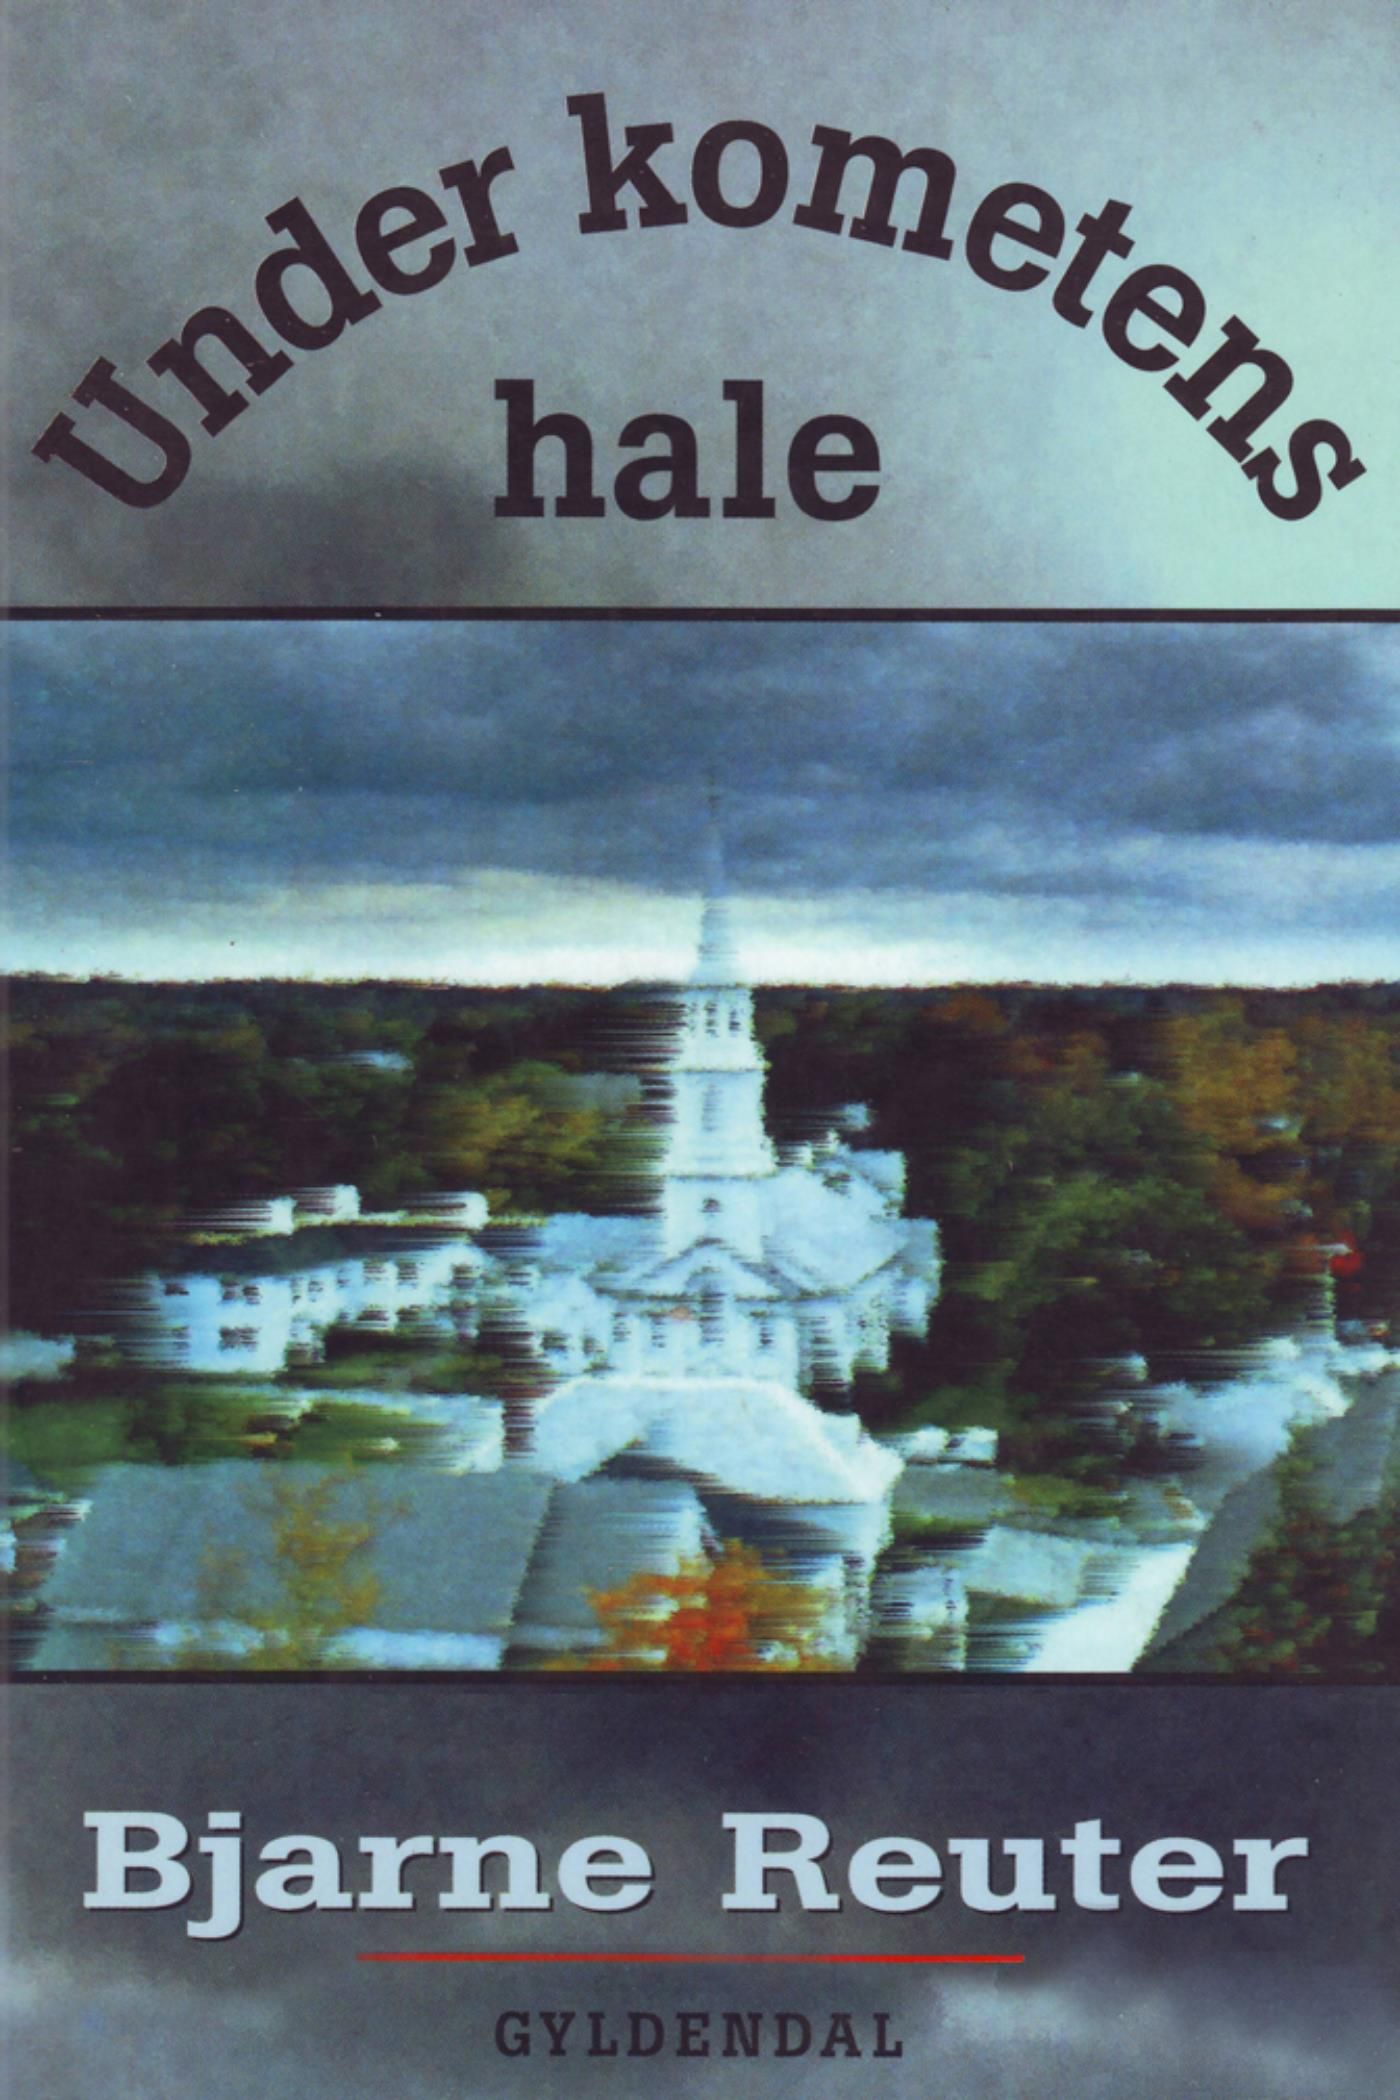 Under kometens hale, eBook by Bjarne Reuter